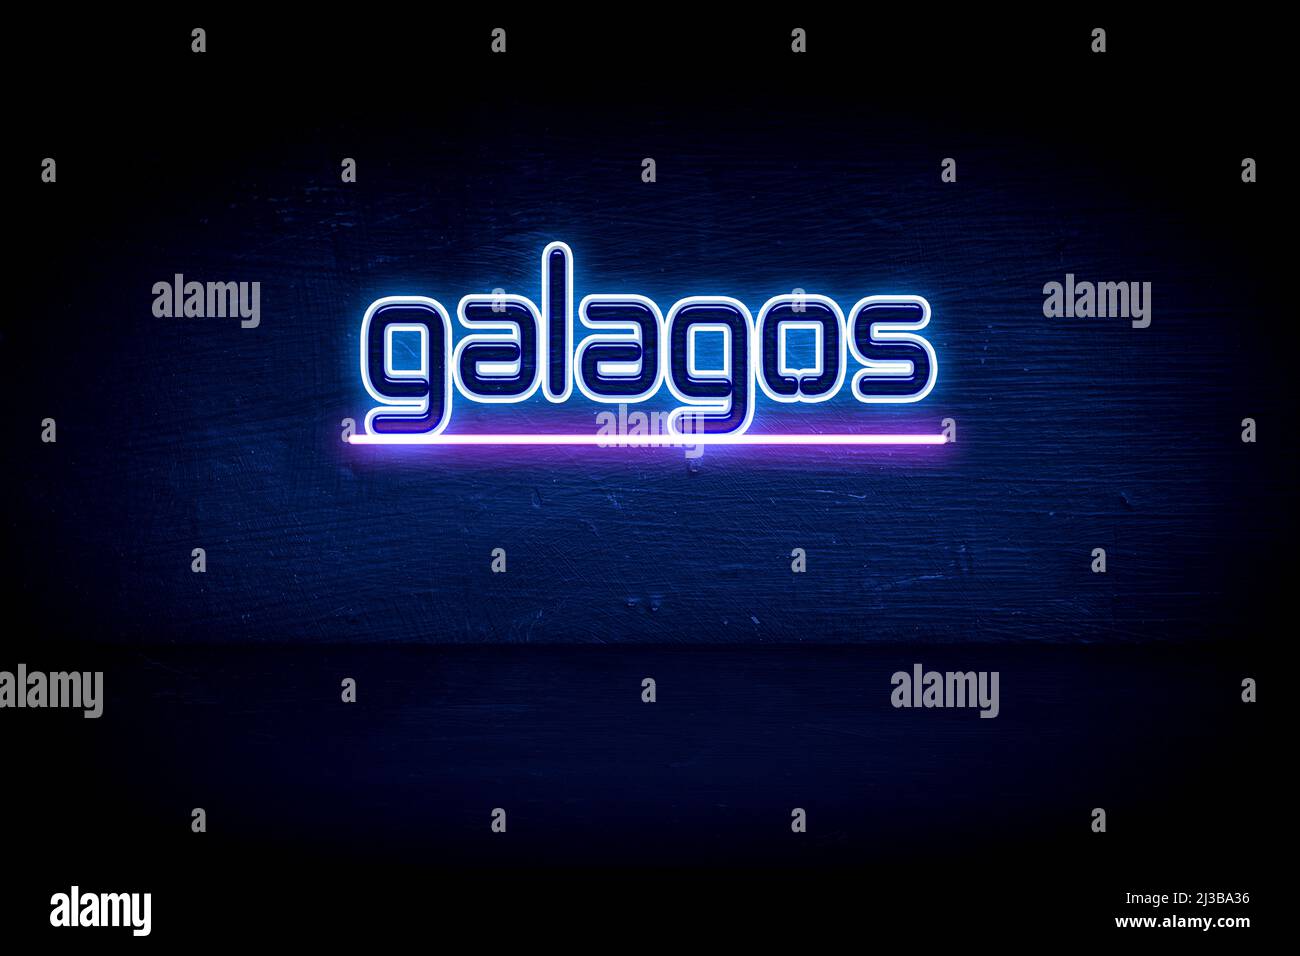 galagos - blue neon announcement signboard Stock Photo